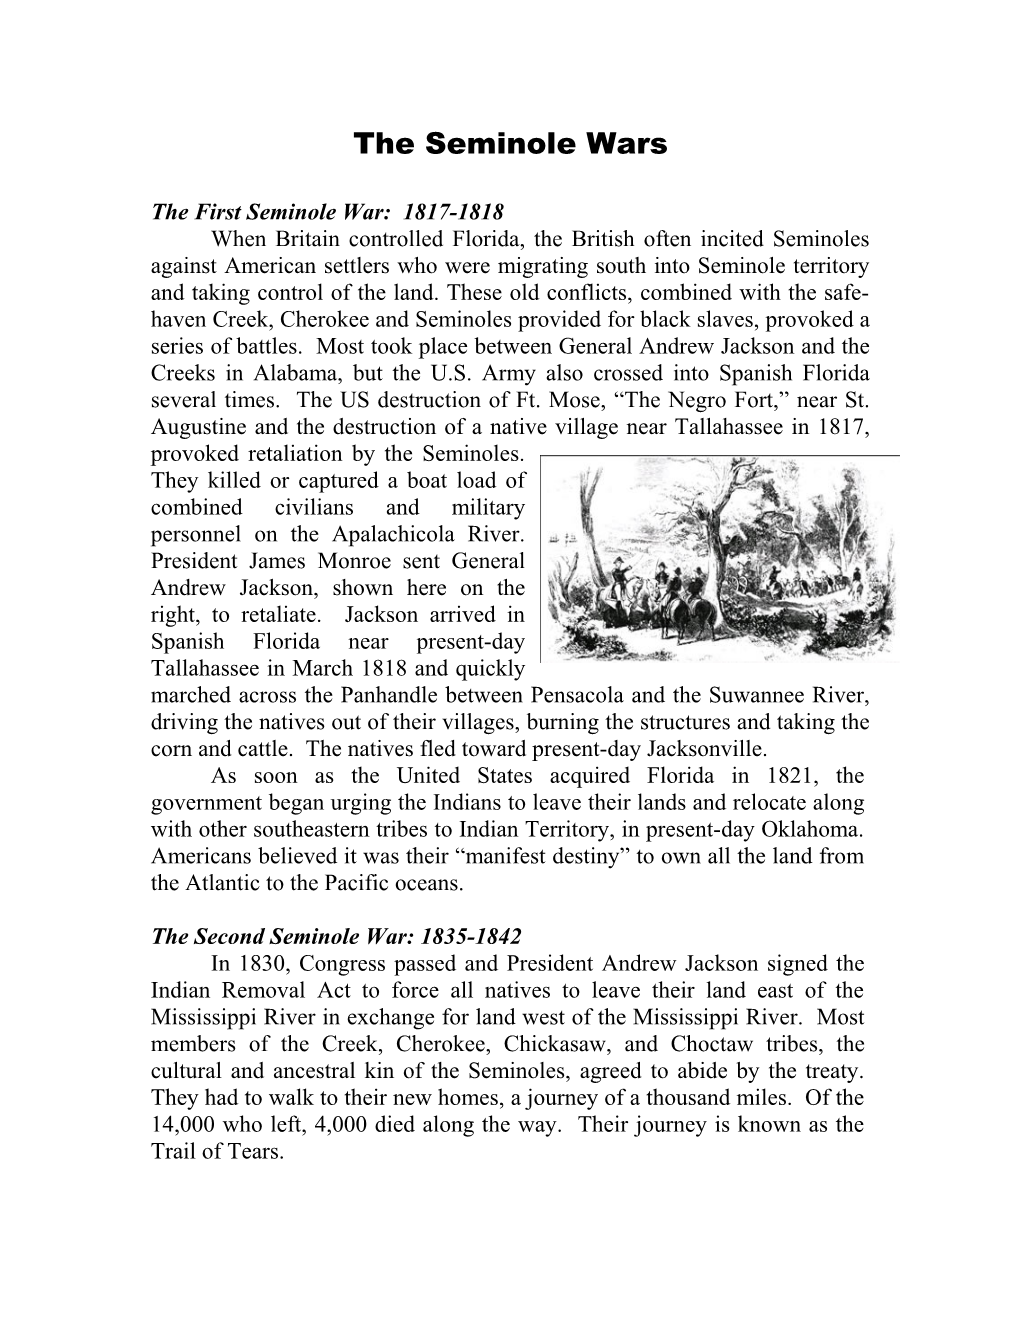 The First Seminole War: 1817-1818